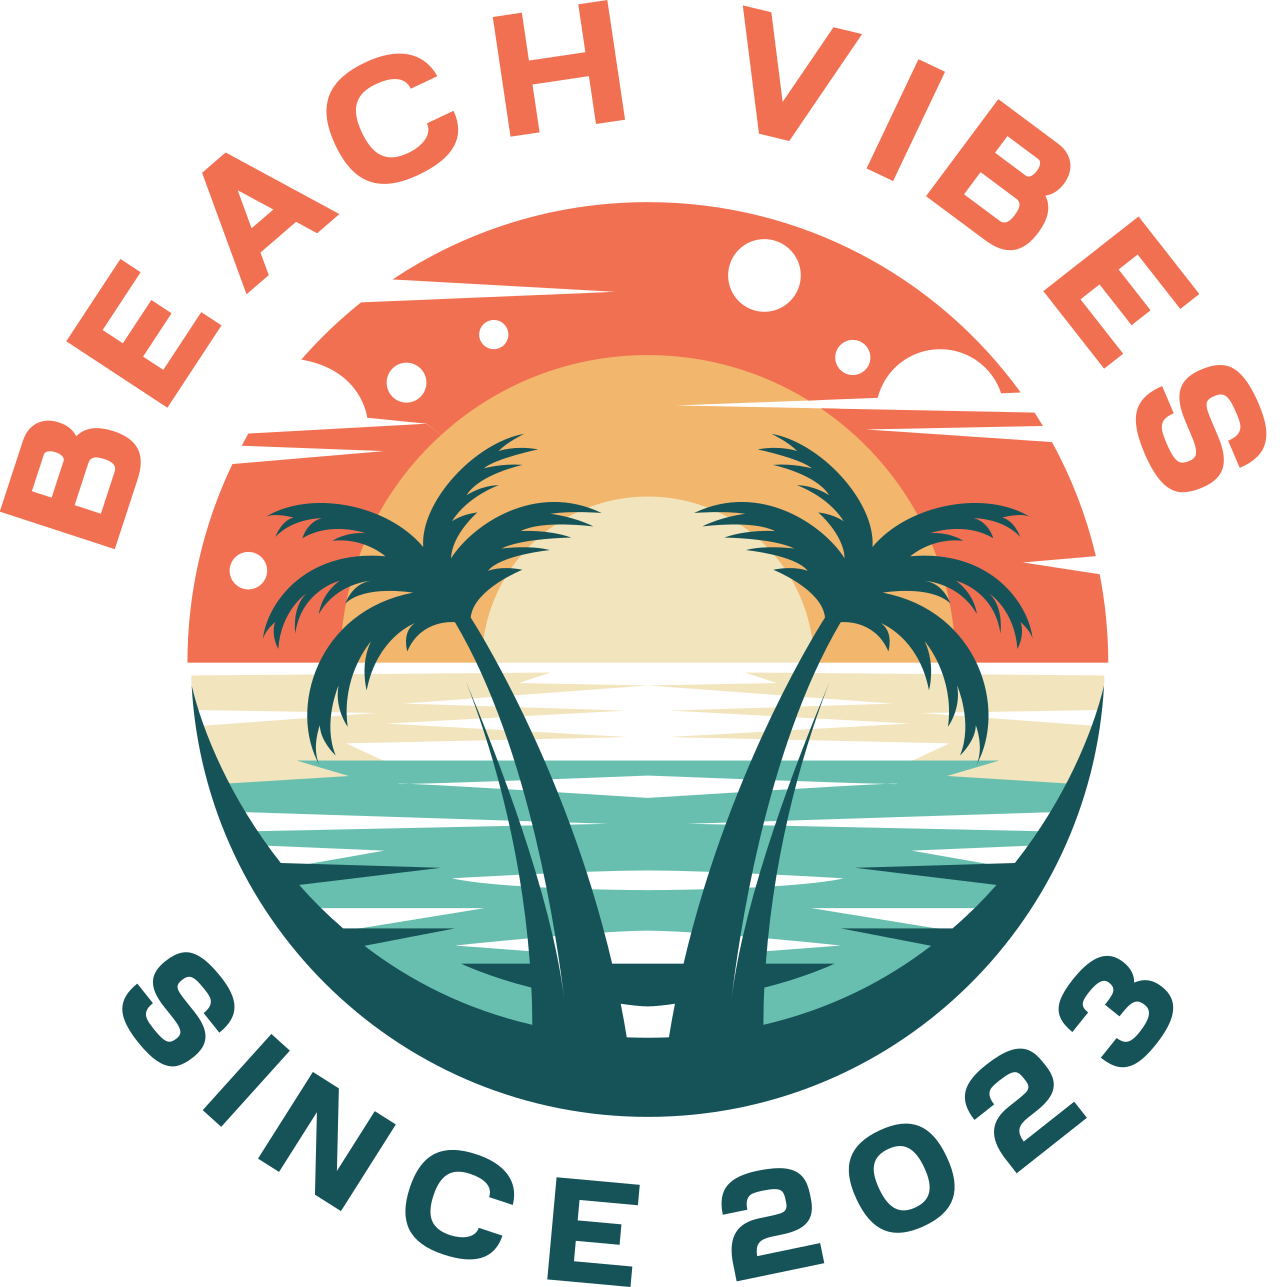 Beach vibes 's logo